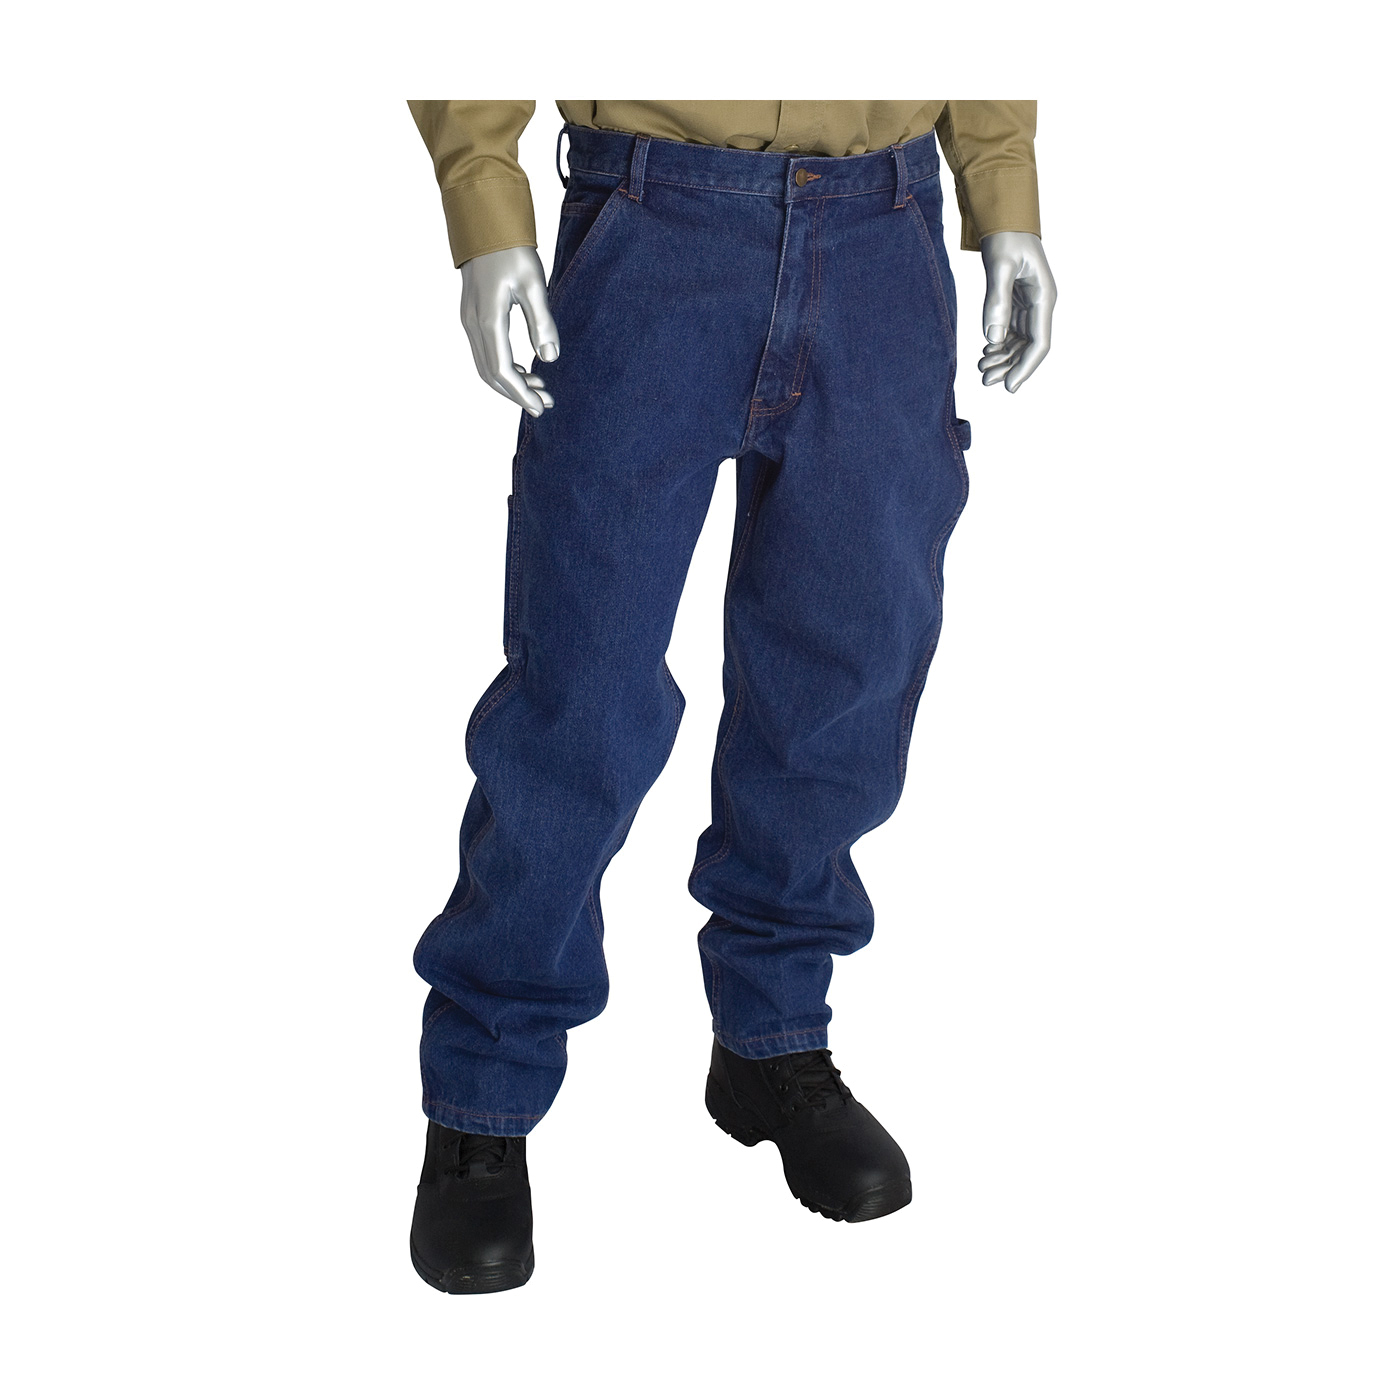 PIP® 385-FRCJ-4432 Carpenter Jeans, 44 in Waist, 32 in L Inseam, Blue Denim, Cotton